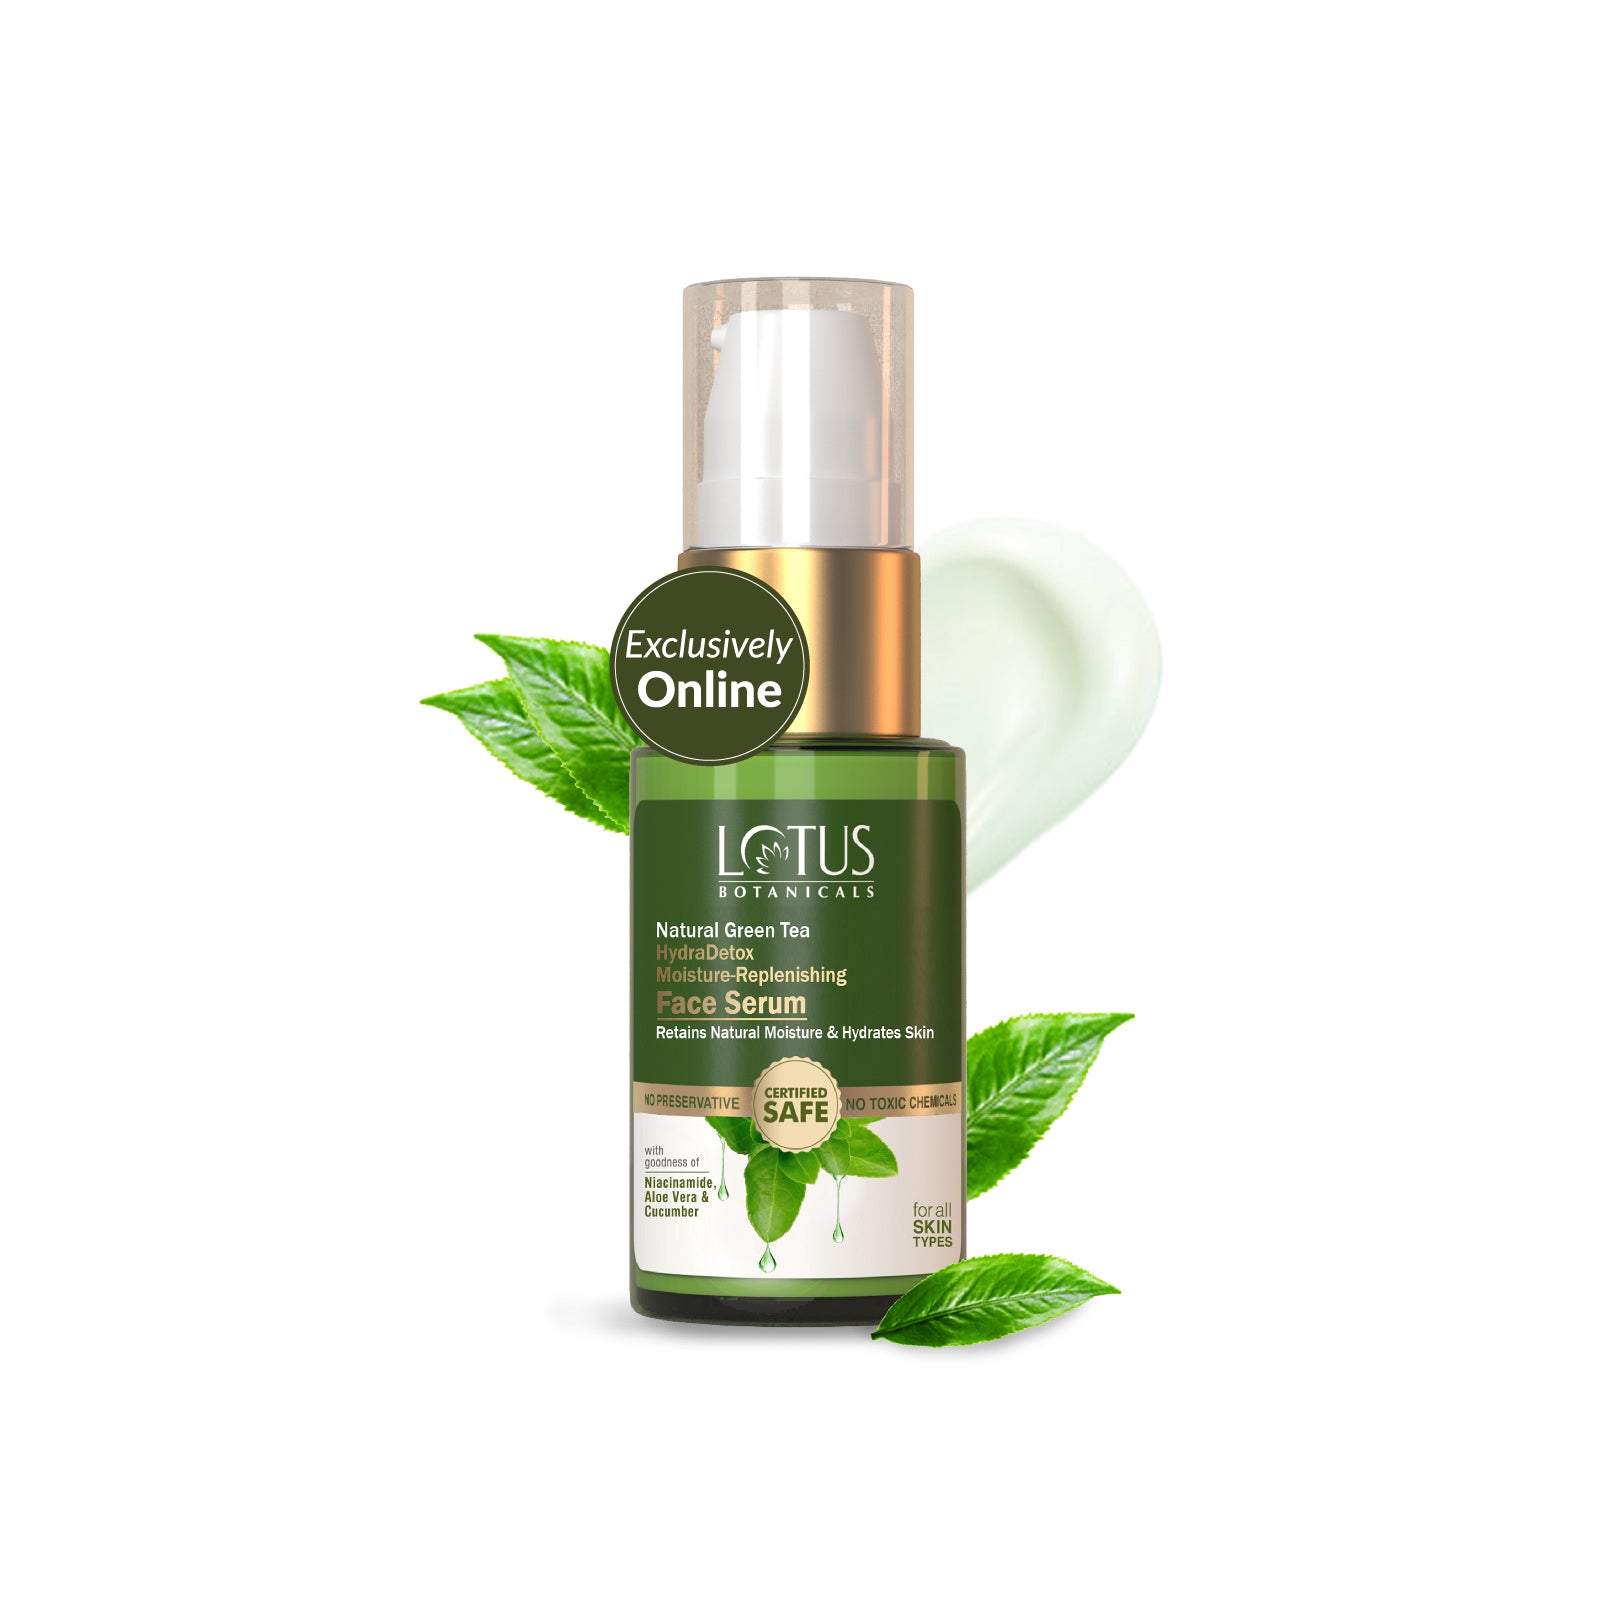 HydraDetox Face Serum with Natural Green Tea, providing deep moisture replenishment for skin